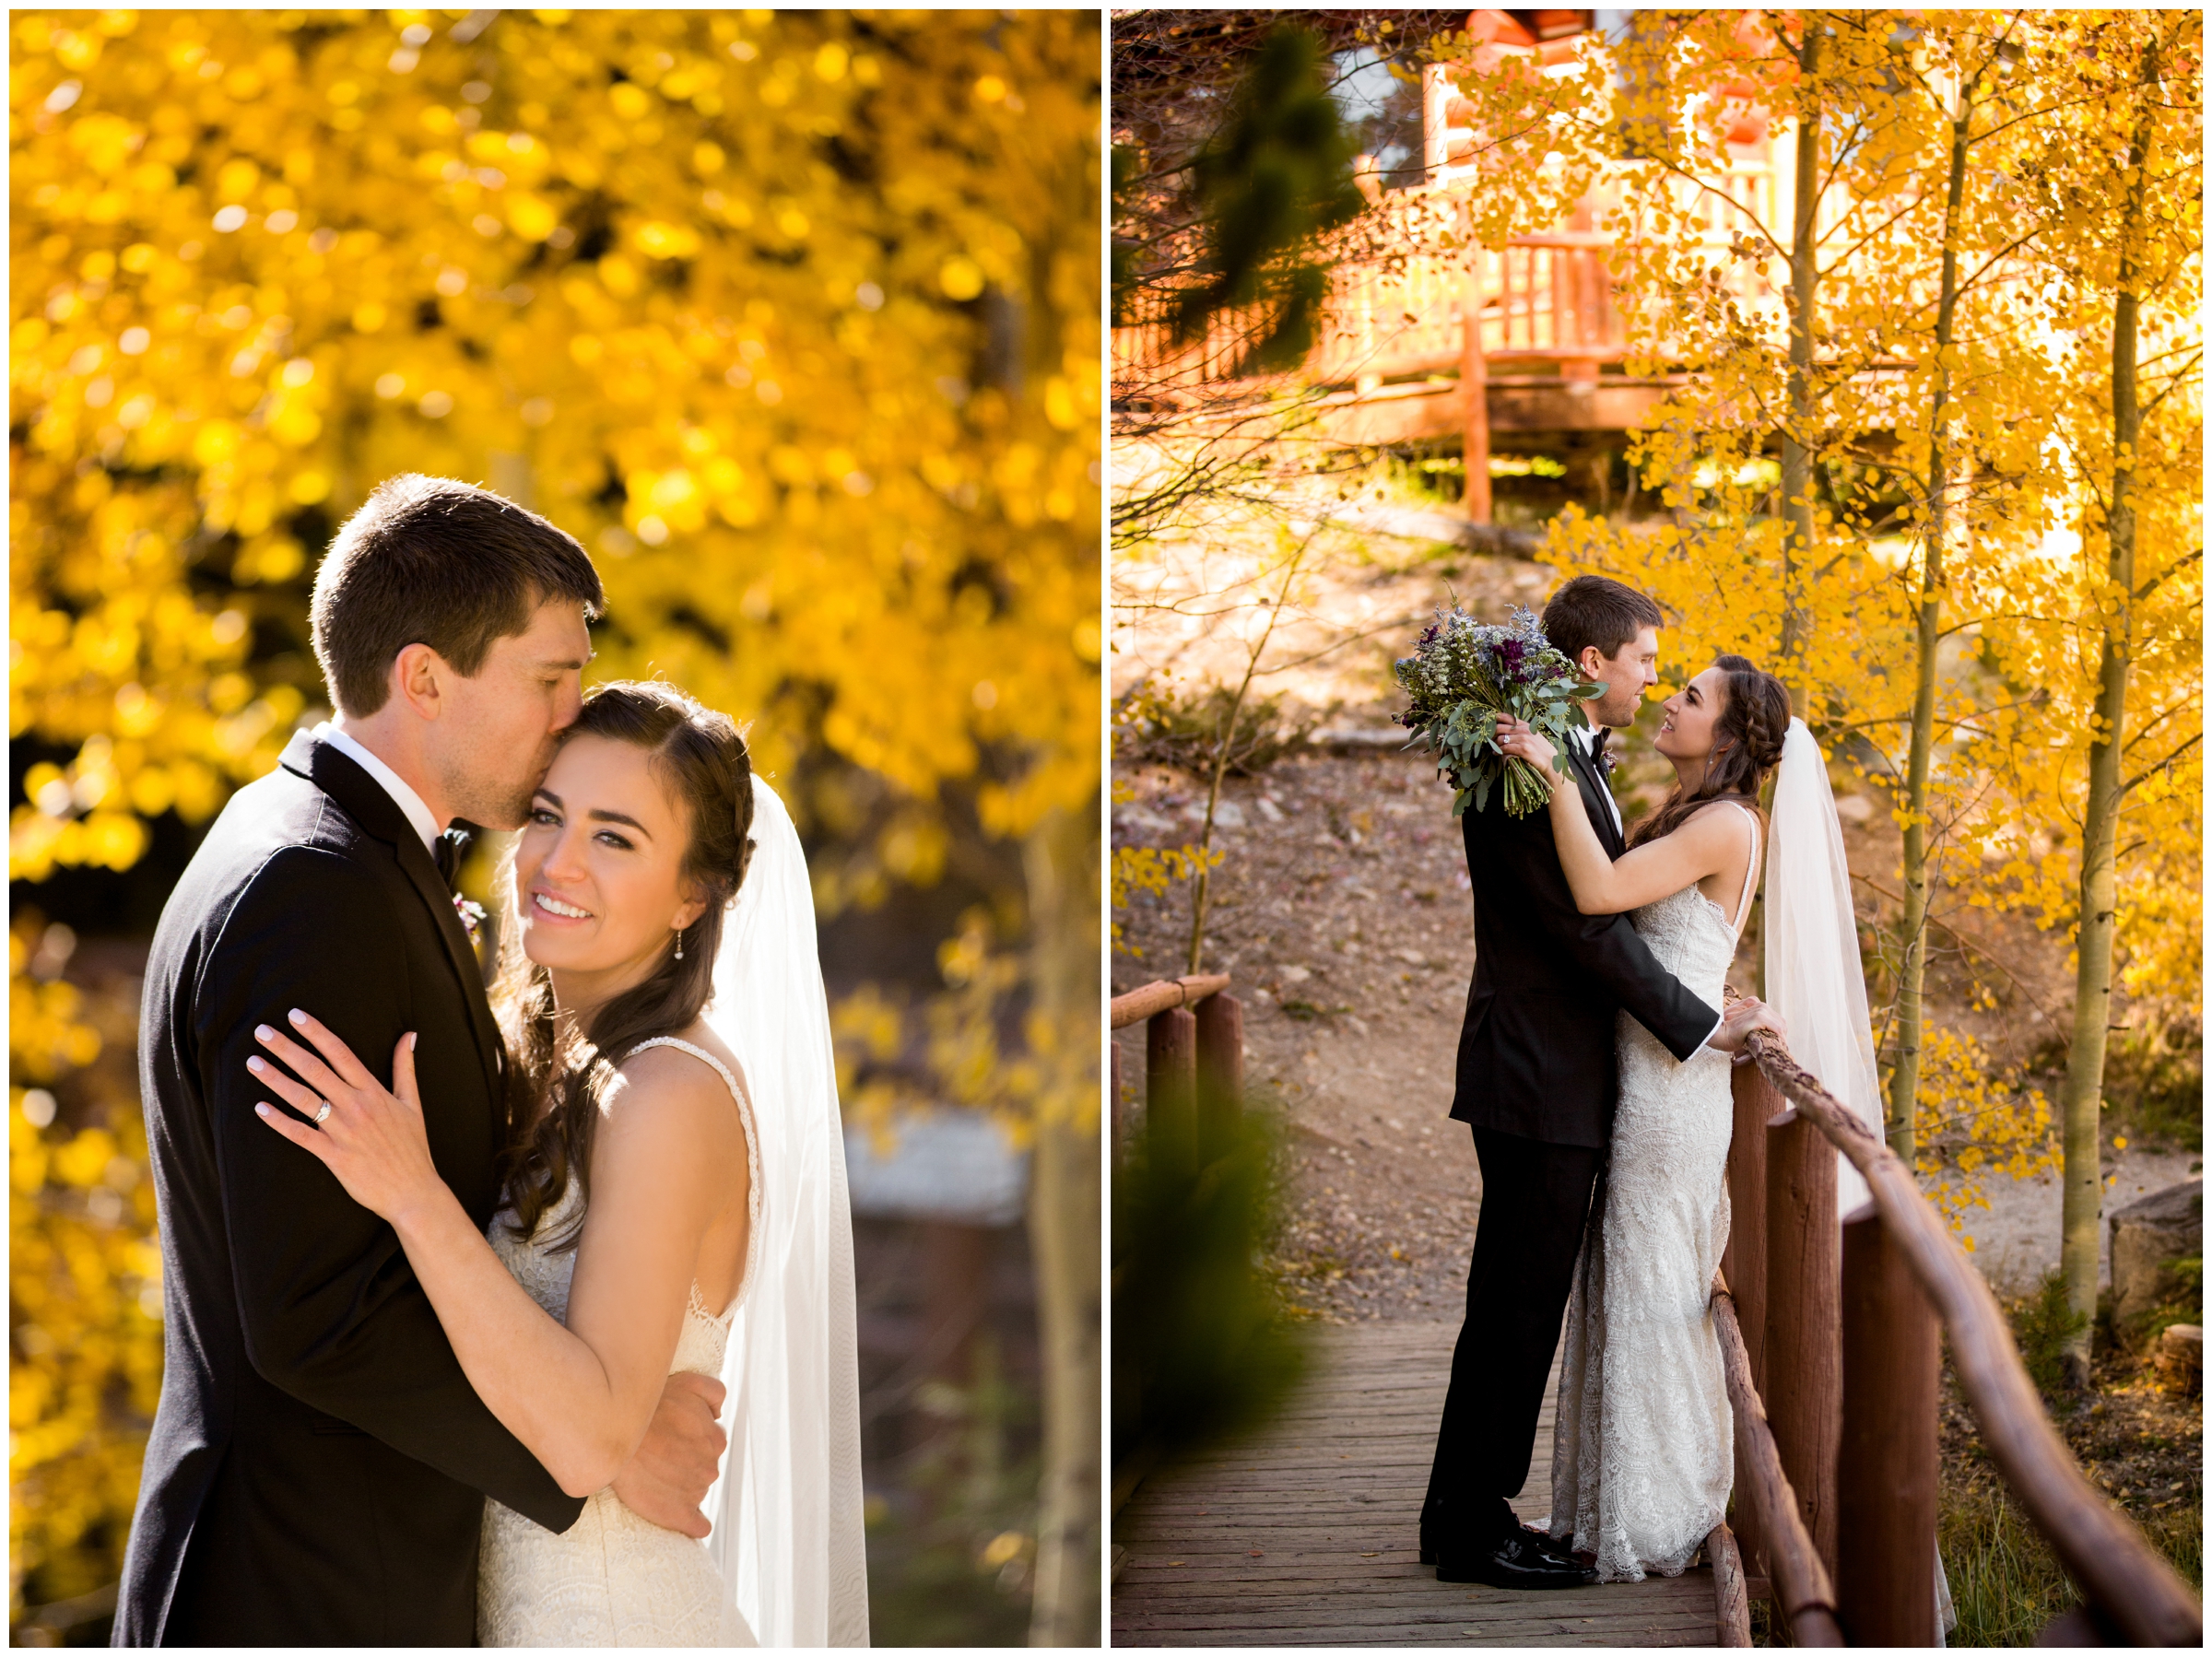 Breckenridge Colorado wedding photos with fall foliage in background 